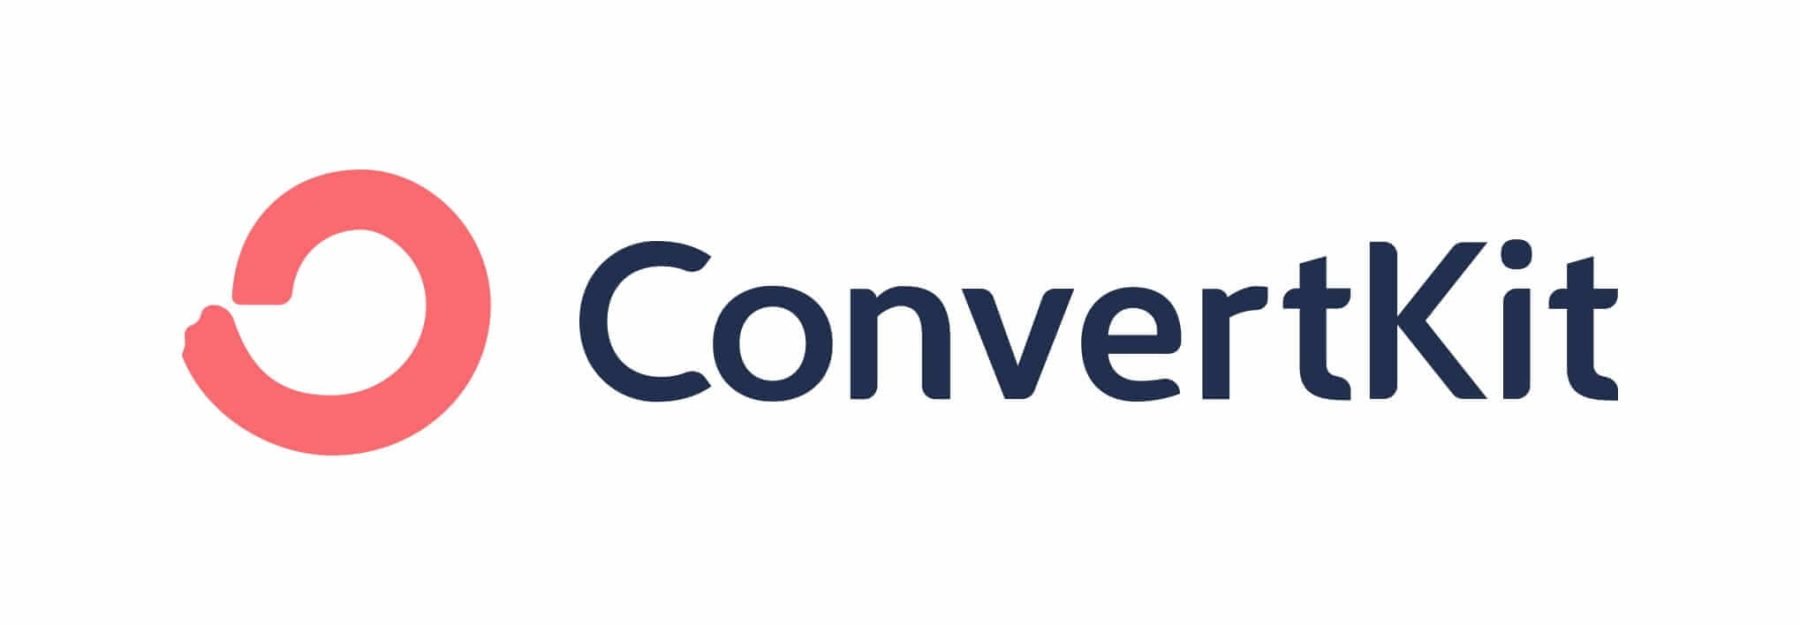 Convertkit logo işareti